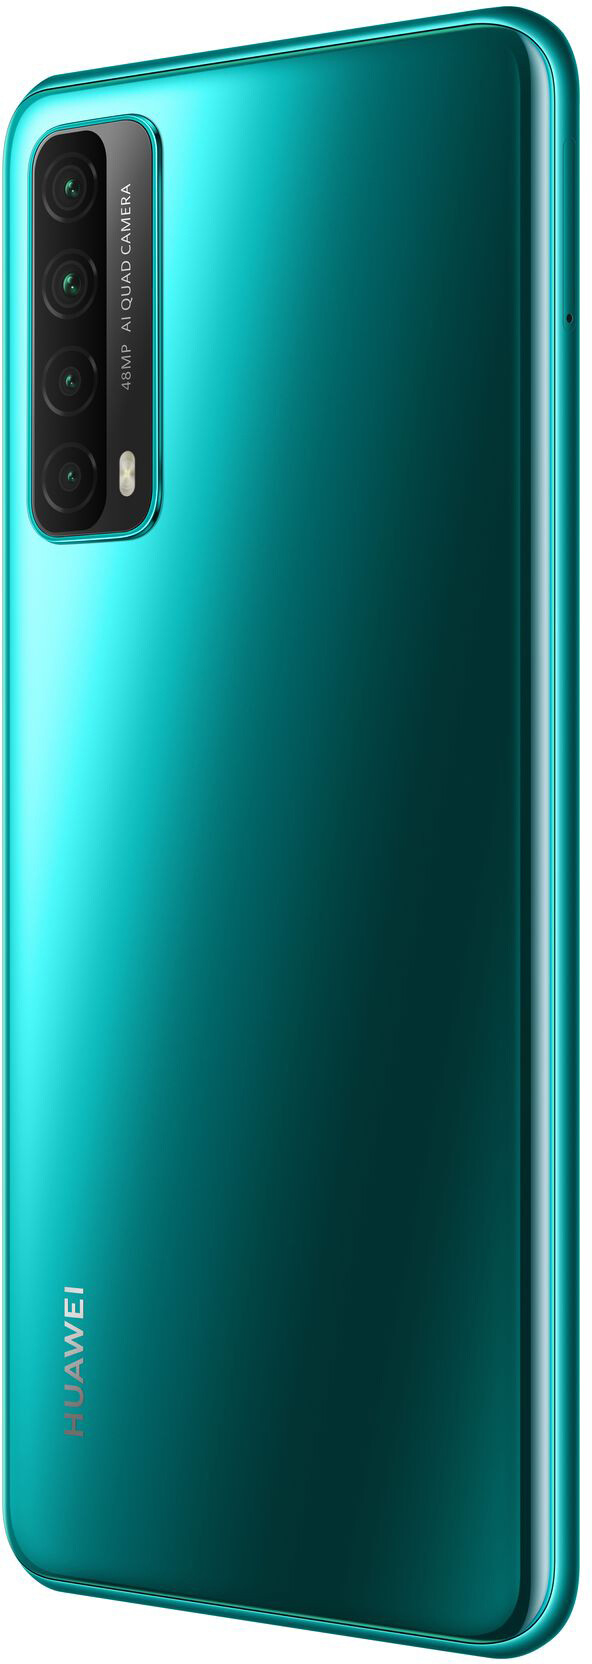 Смартфон Huawei P smart (2021) 4/128GB Crush Green (Зеленый)